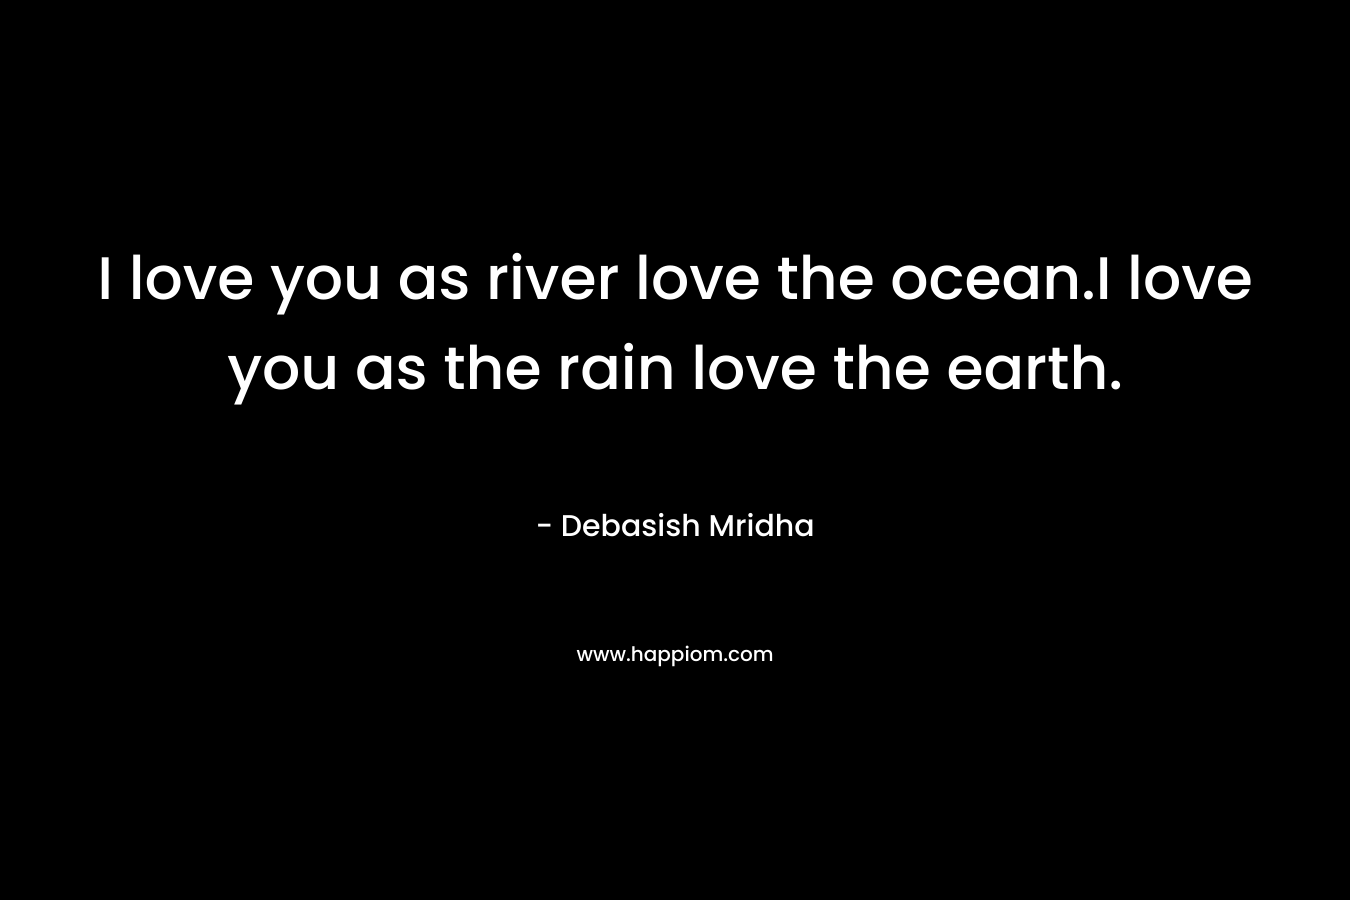 I love you as river love the ocean.I love you as the rain love the earth.